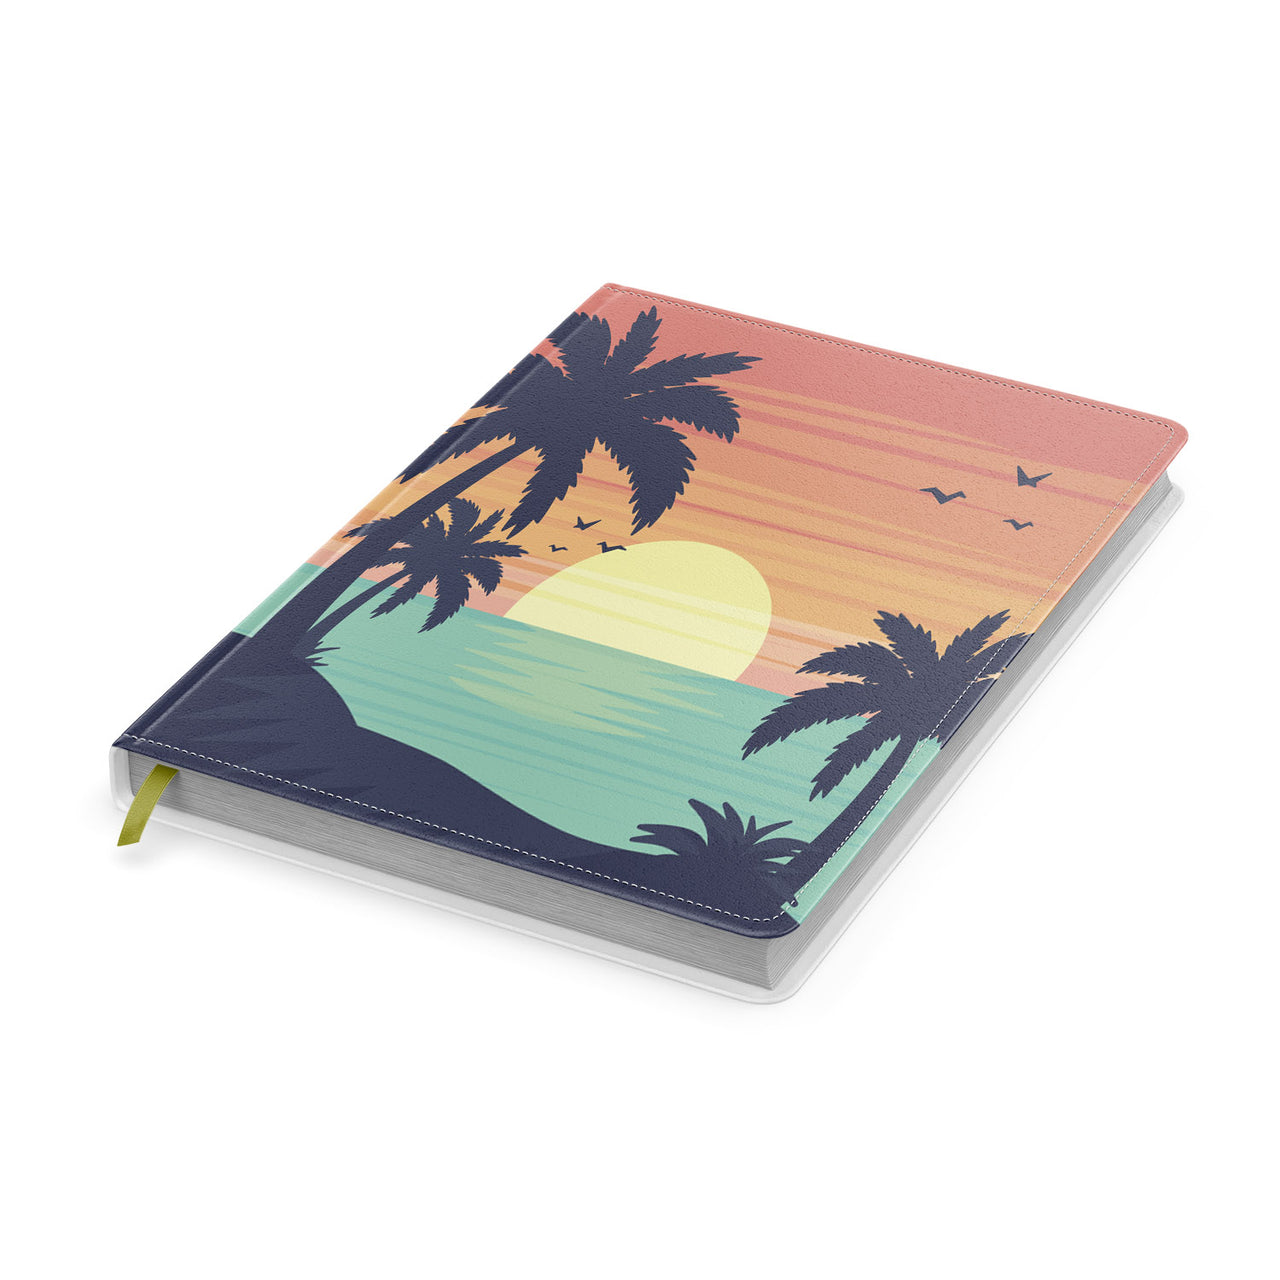 Tropical Summer Theme Designed Notebooks